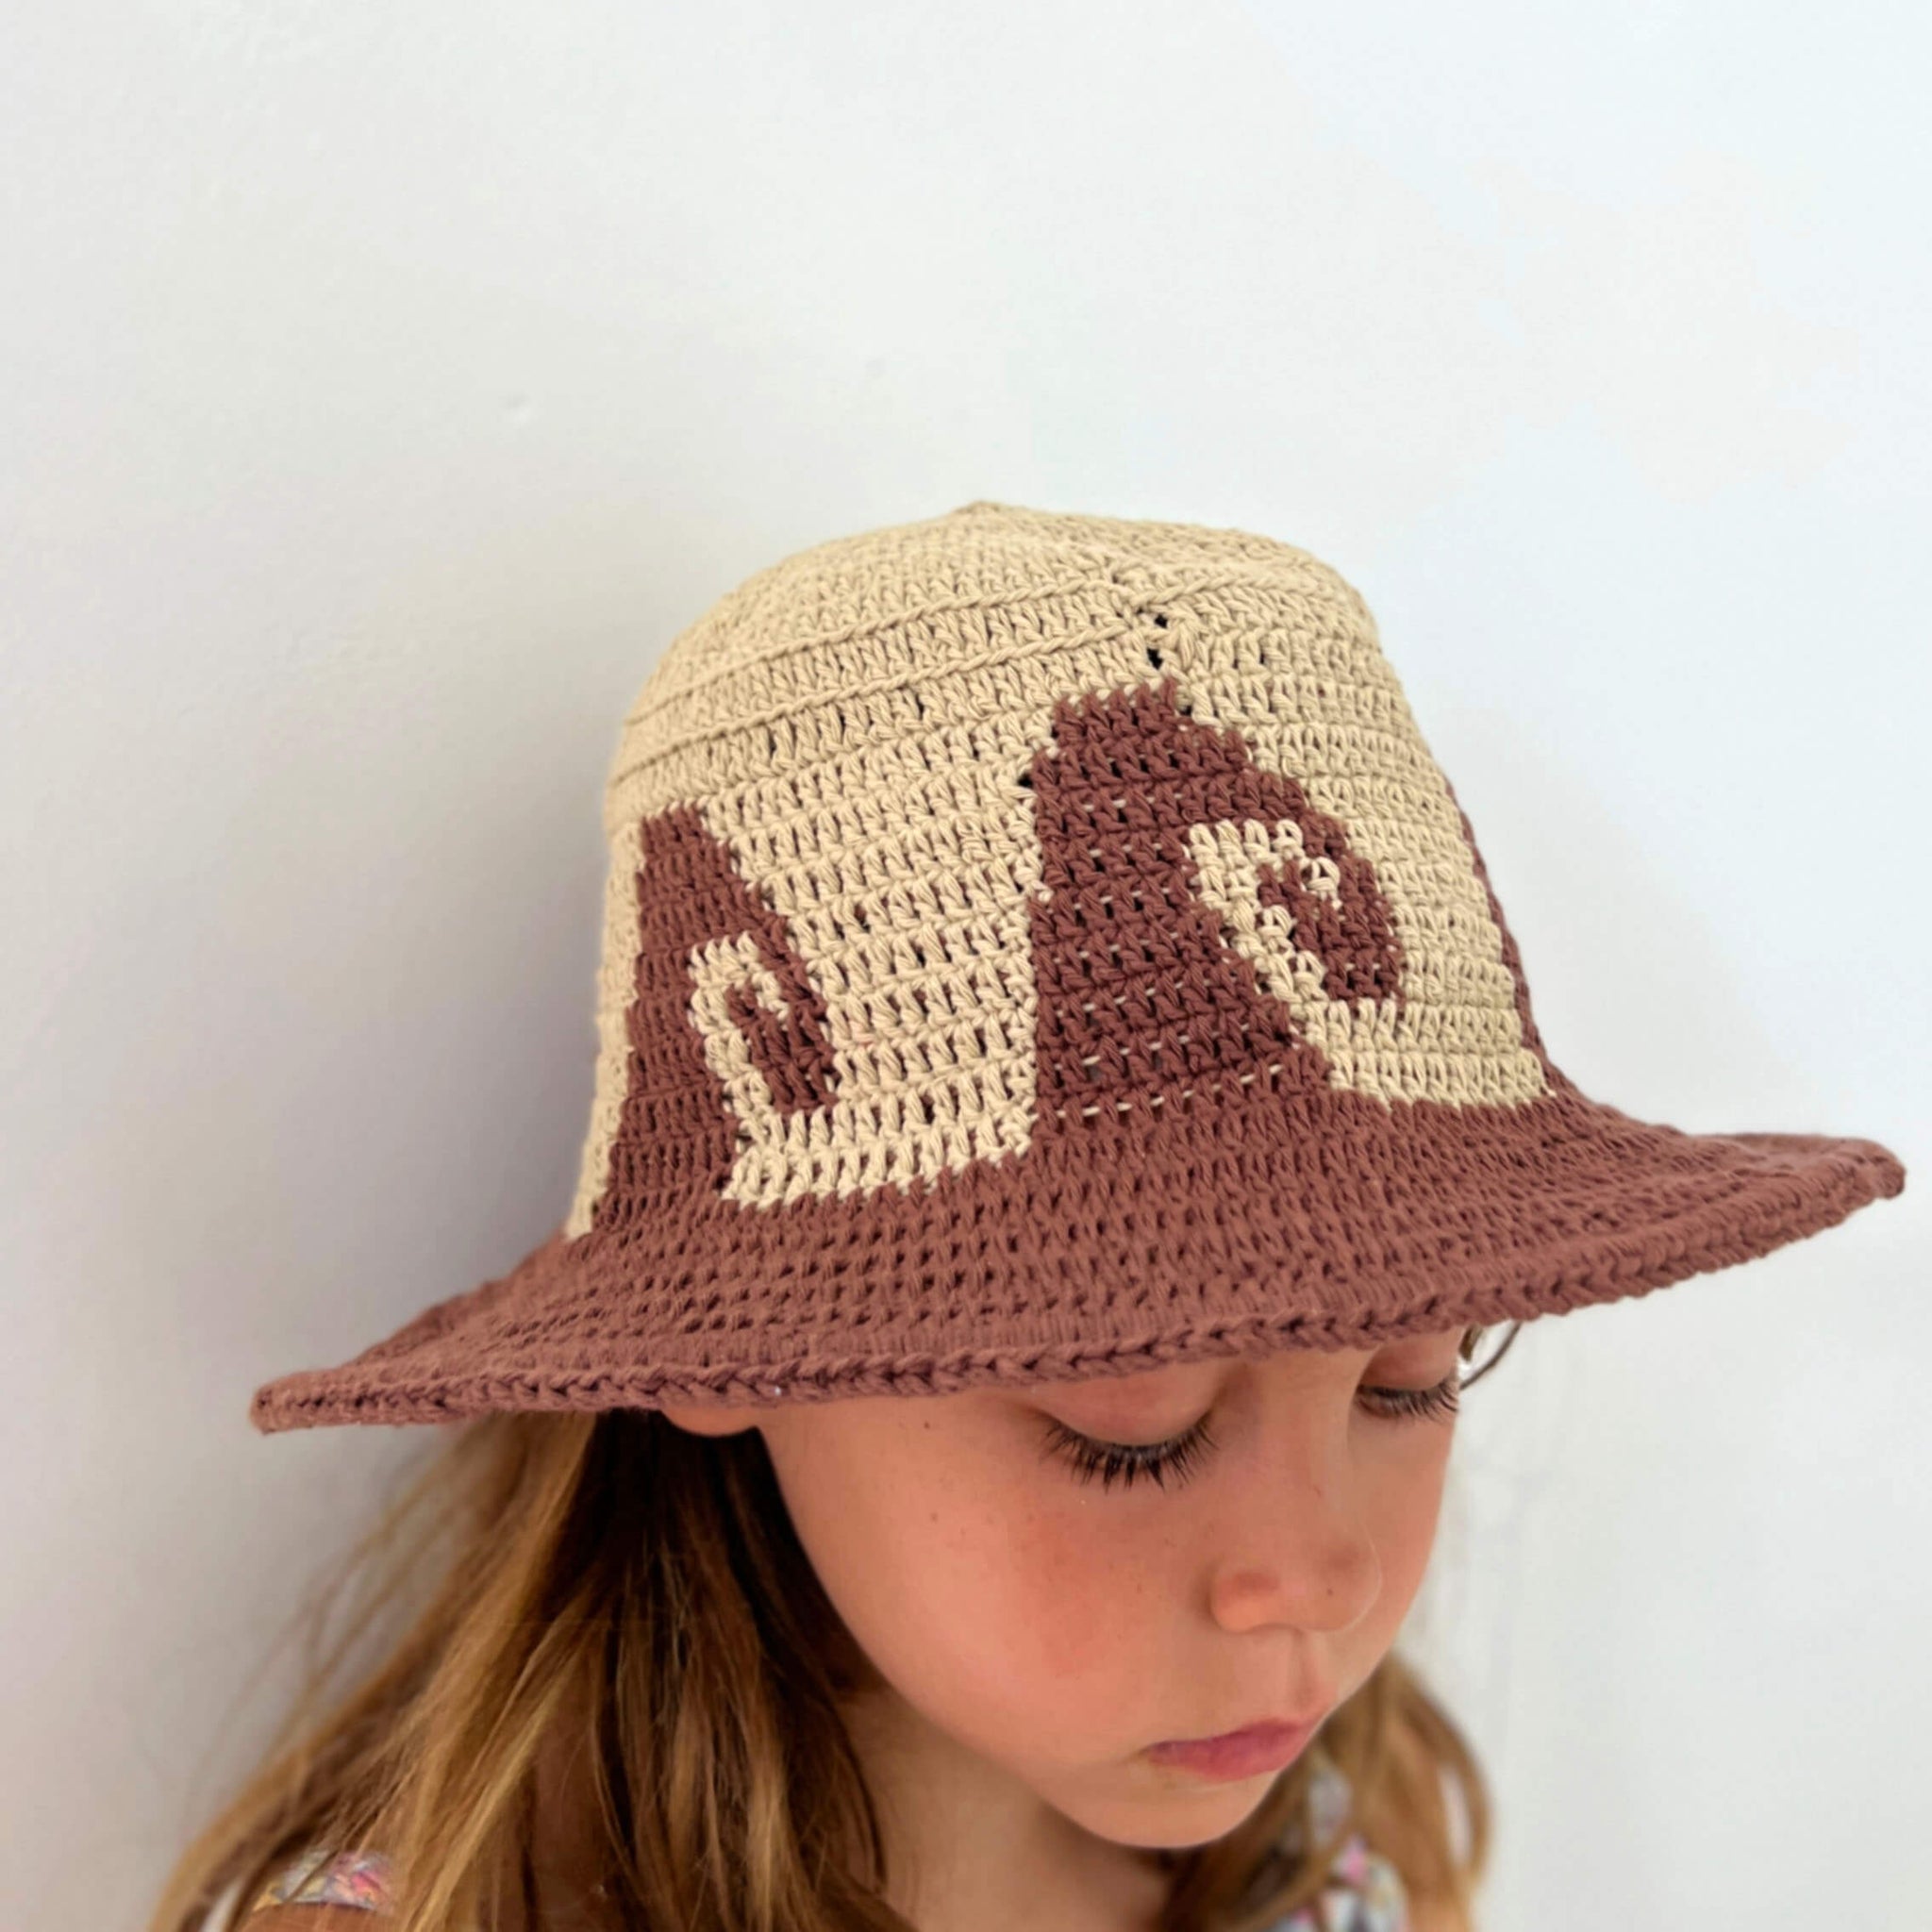 Brown and beige wave crochet hat